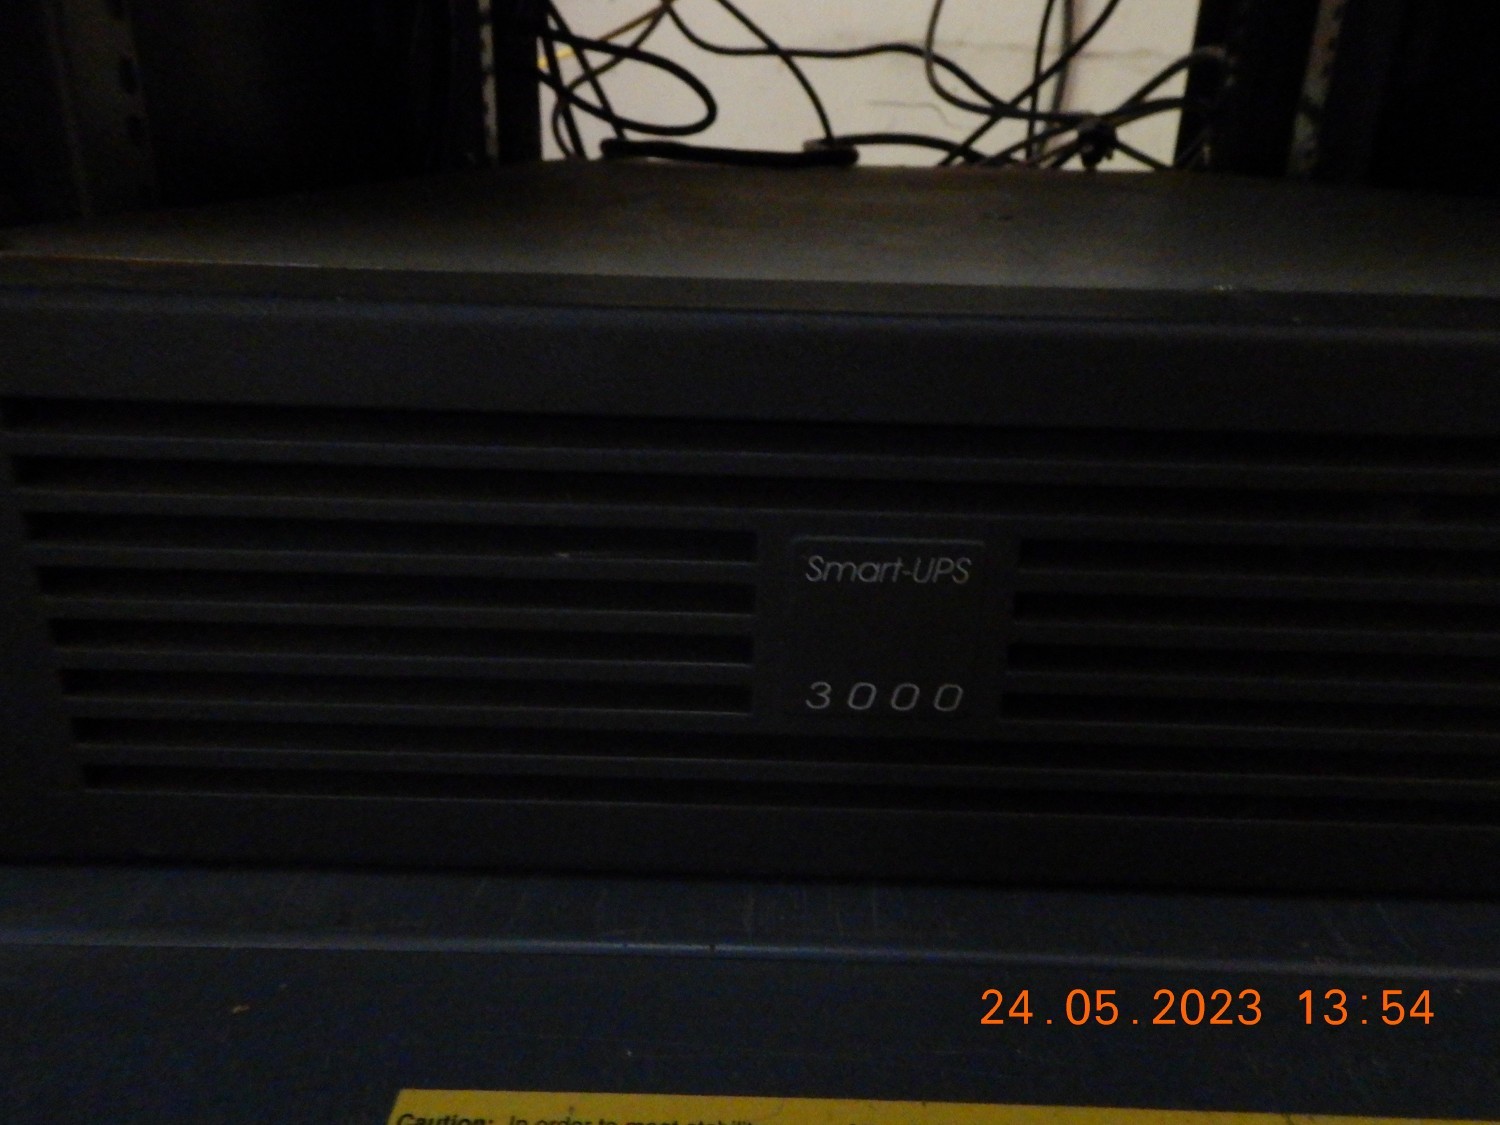 2-x-dell-r900-4-x-4-16-core-zeon-servers-digital-server-rack-3000-watt-powerware-ups-with-new-batteries-may-2022-big-18